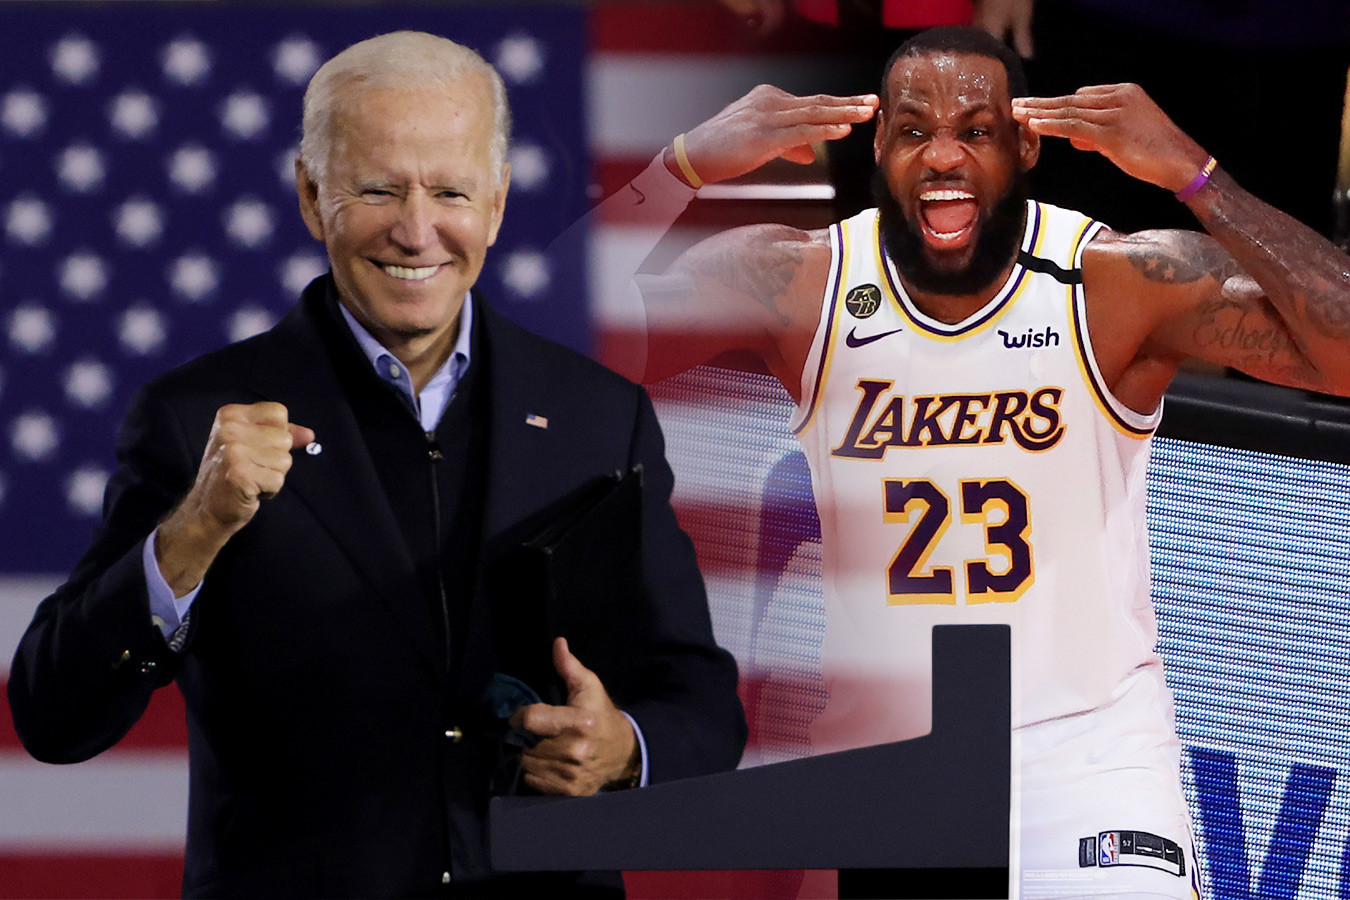 Президент США поздравил Леброна с историческим рекордом в истории НБА